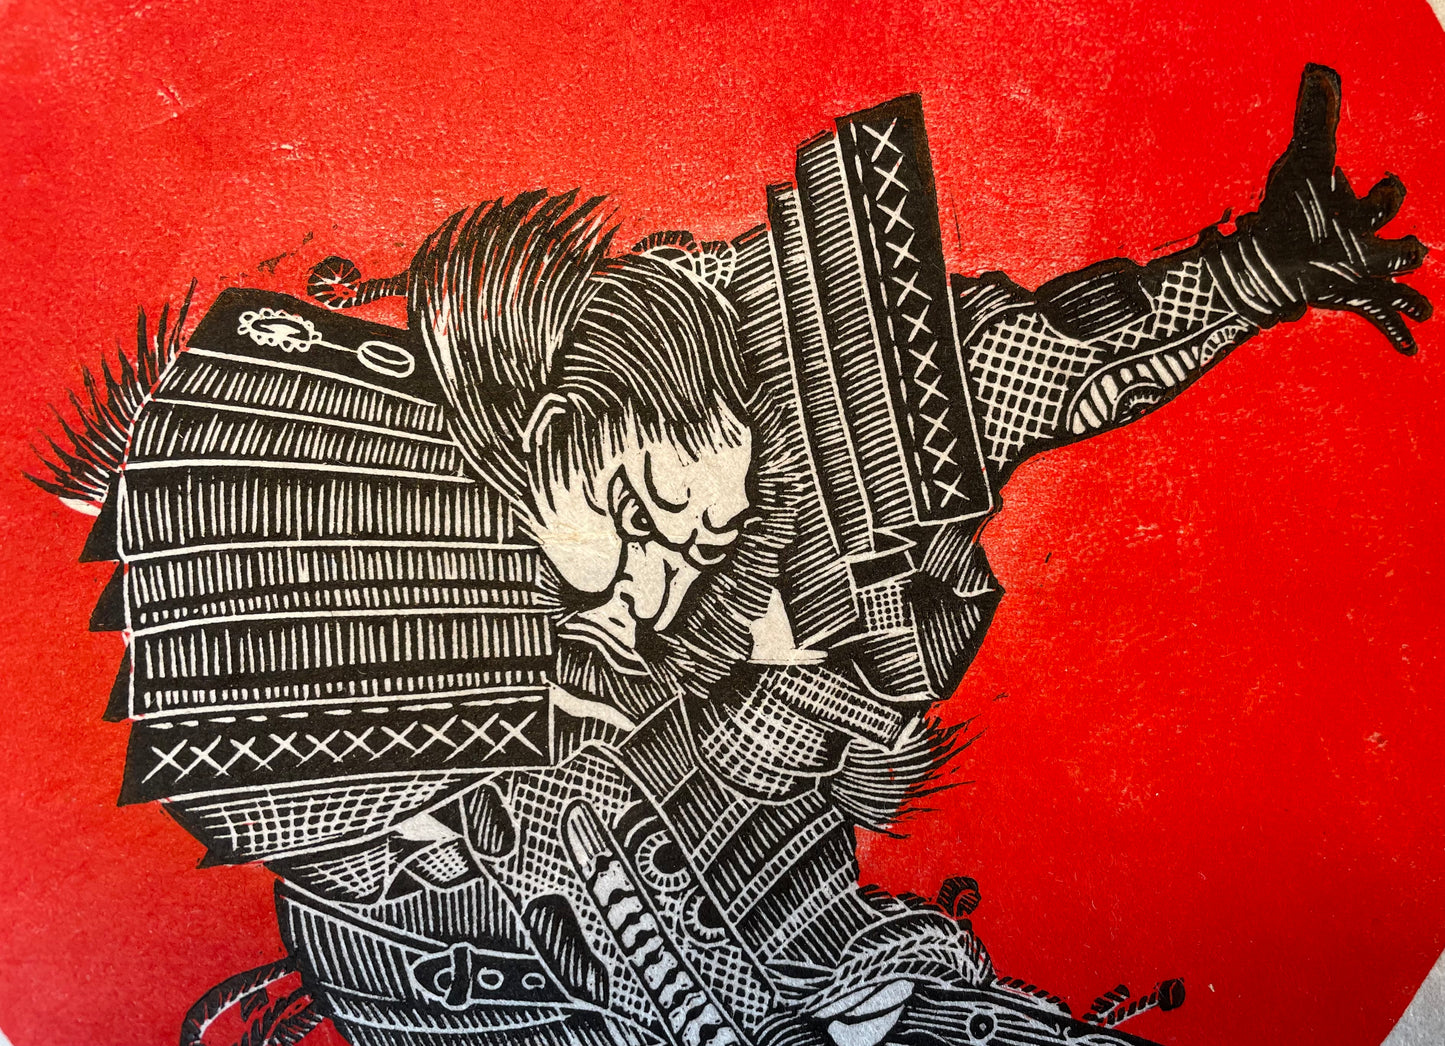 "The Samurai" Print